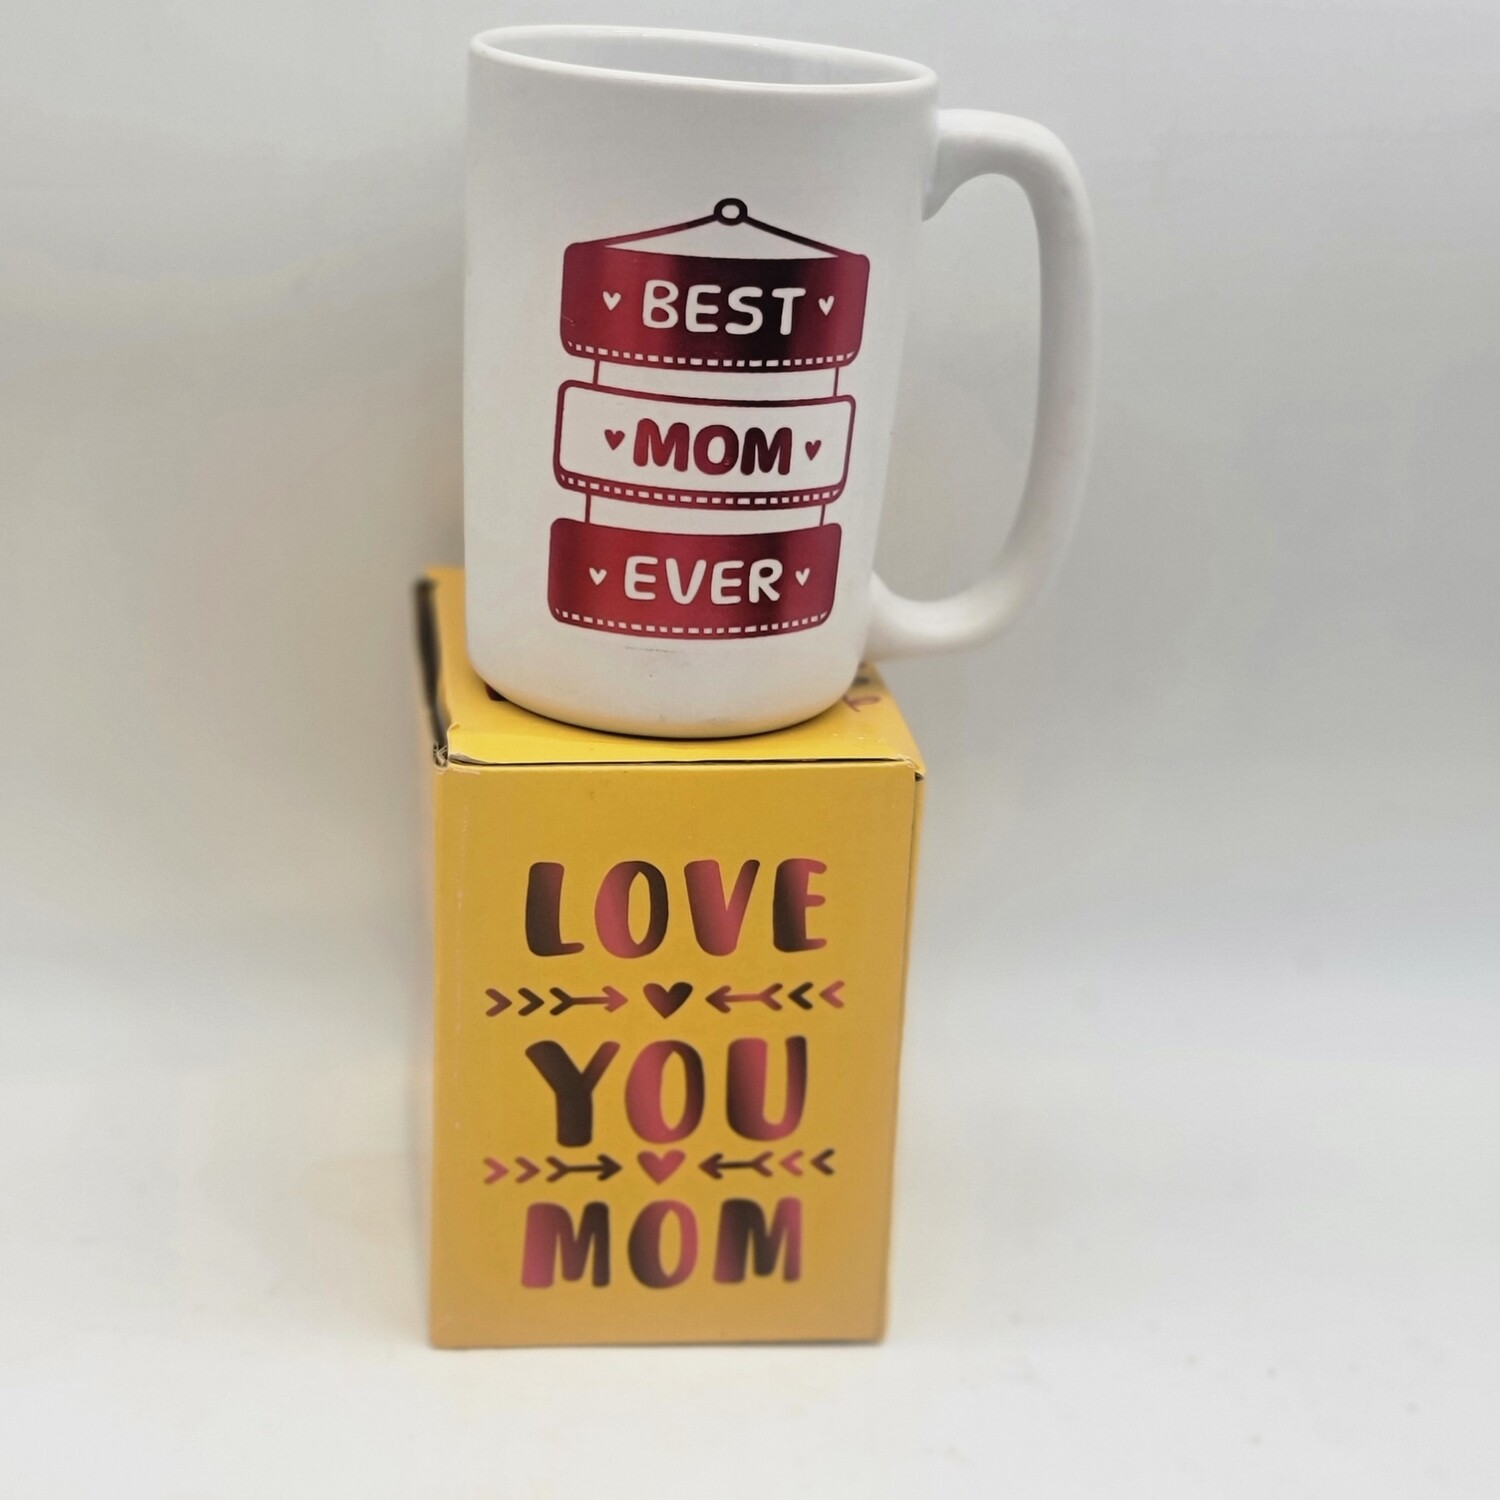 Love you Mum
tea Cup - 4 1/2